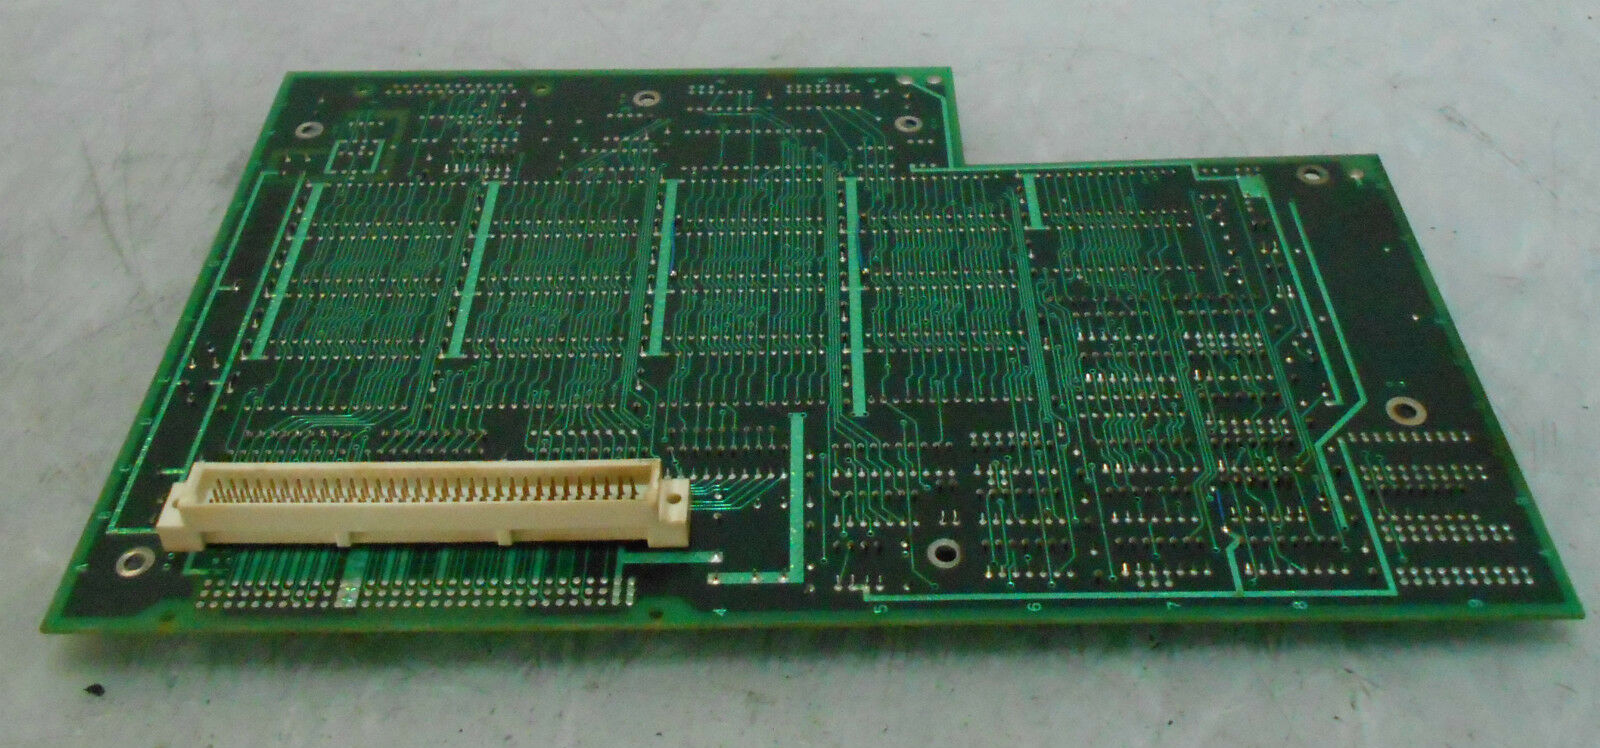 Mitsubishi Scgaltplatte, FX1 5A, BN624A333H01, Rev B 